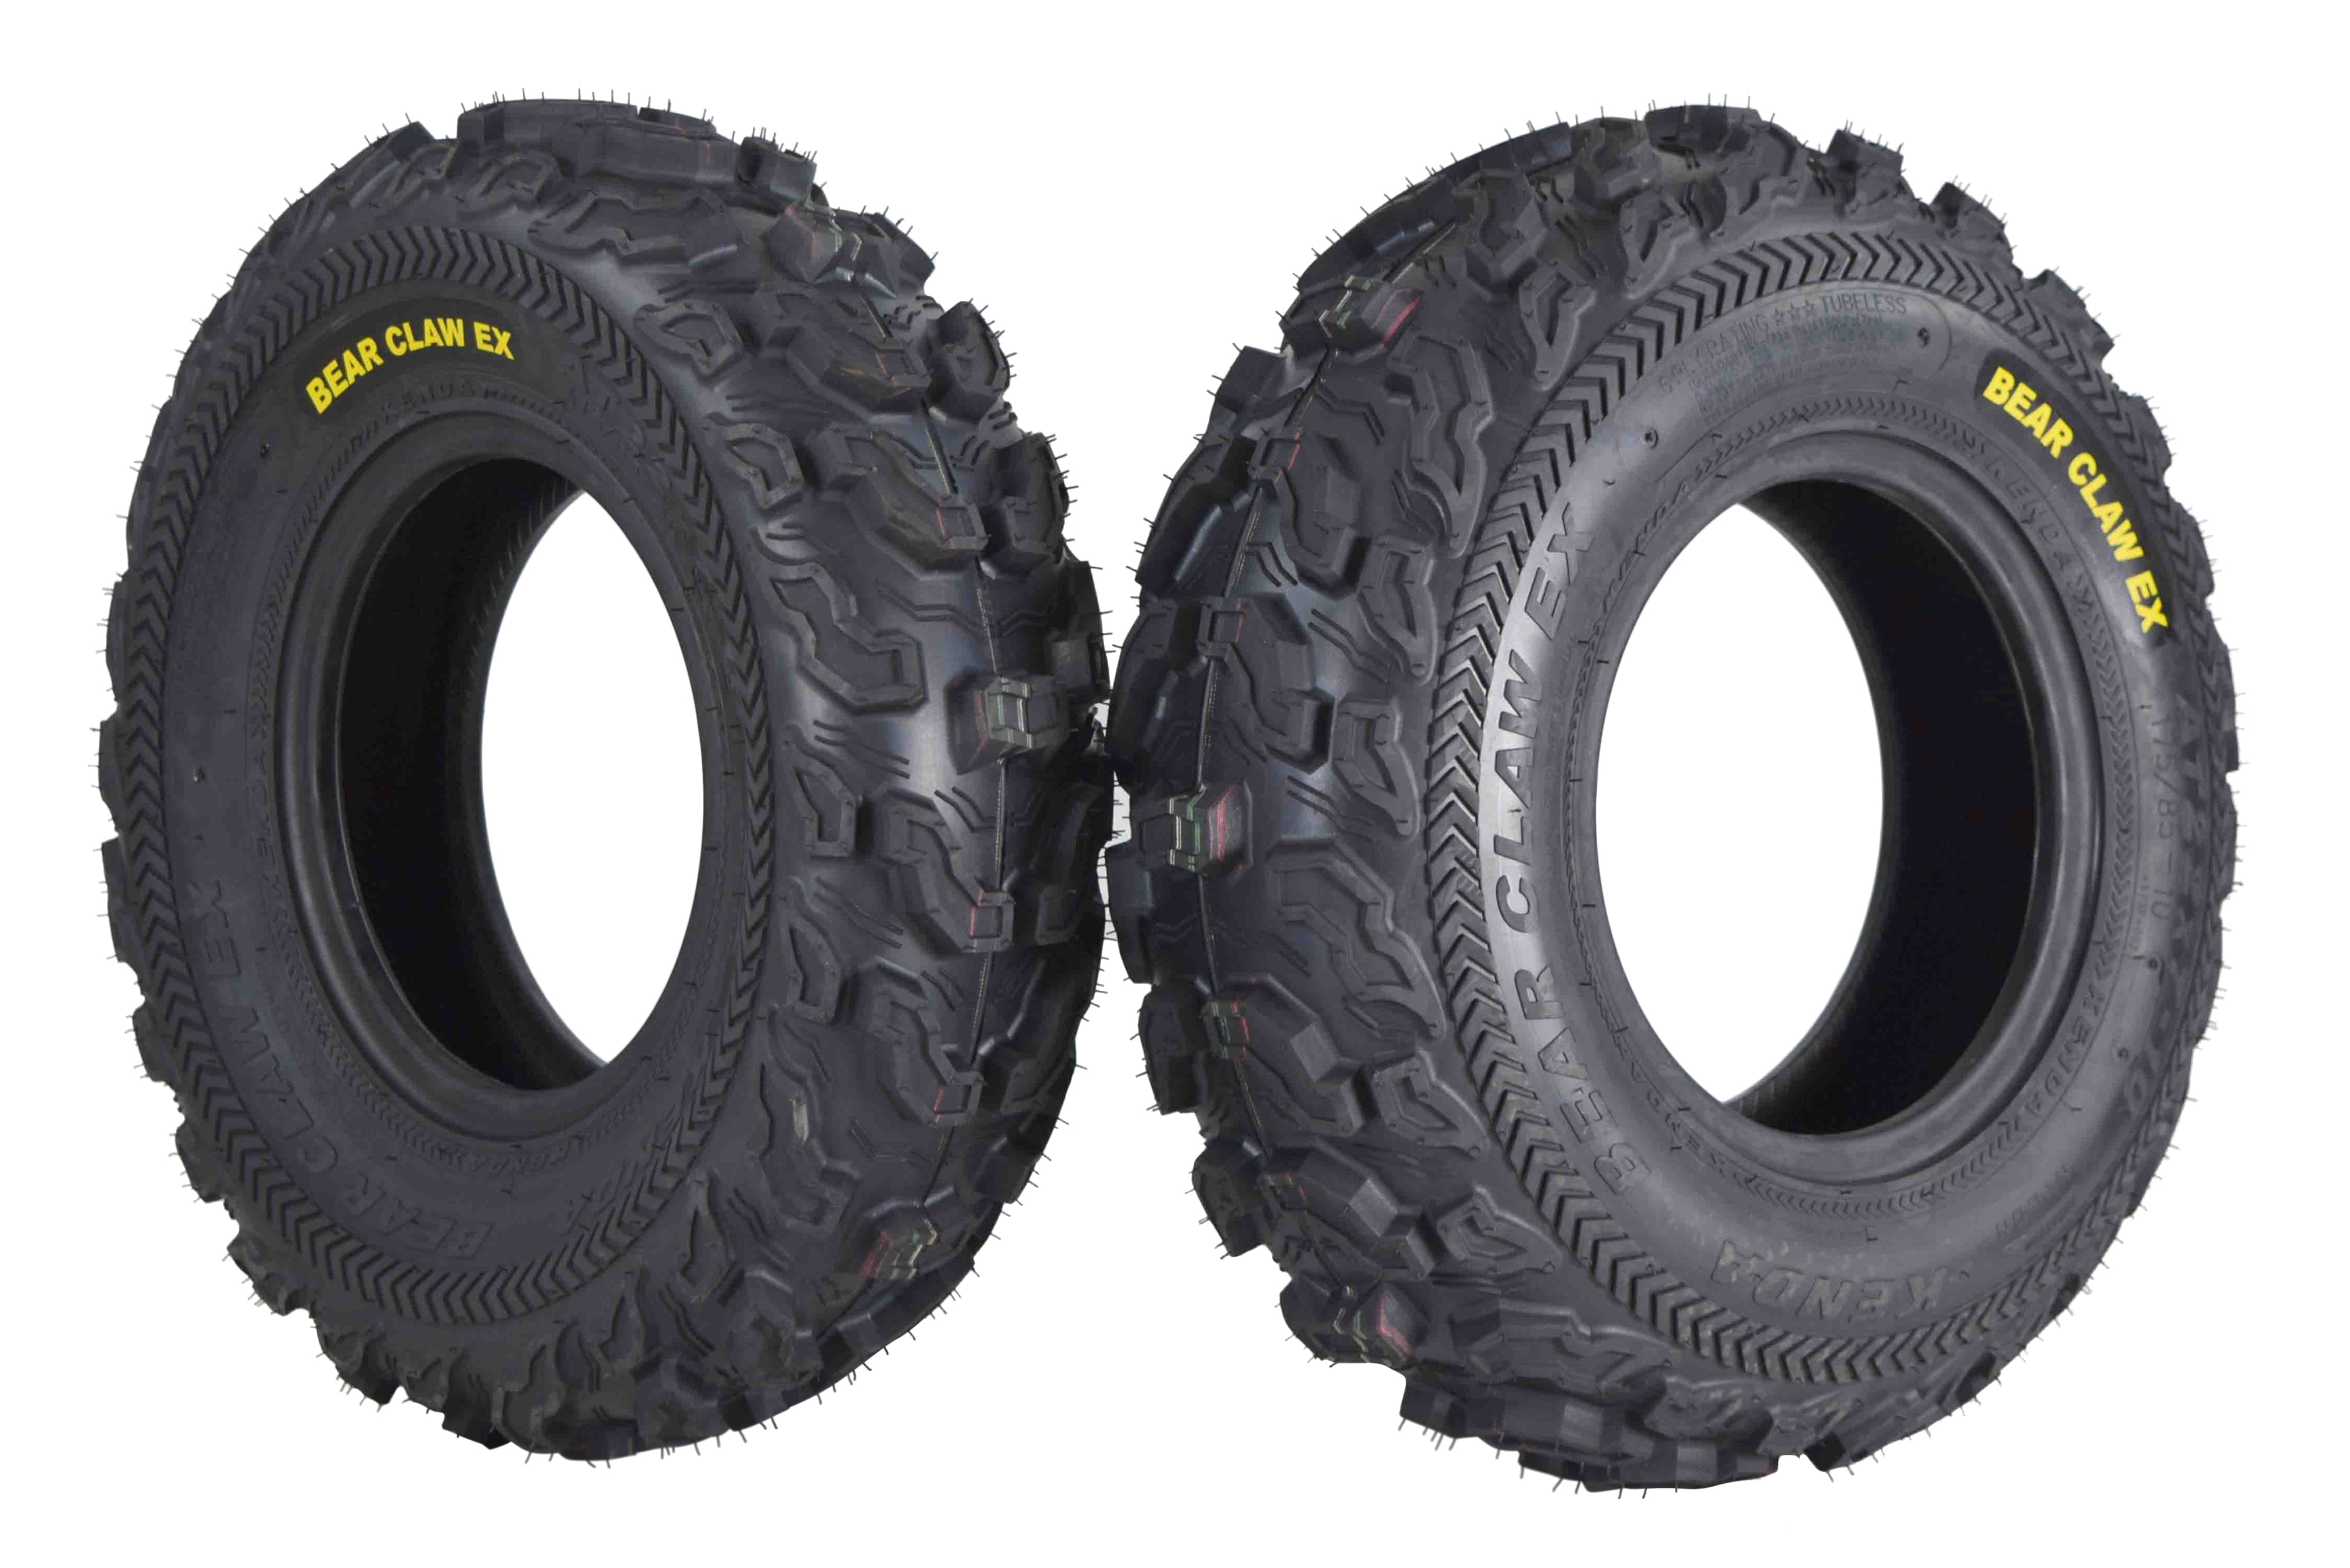 Kenda Bear Claw EX K573 22x7-10 Front 6 PLY ATV Tires Bearclaw 22x7x10 (2  Pack)